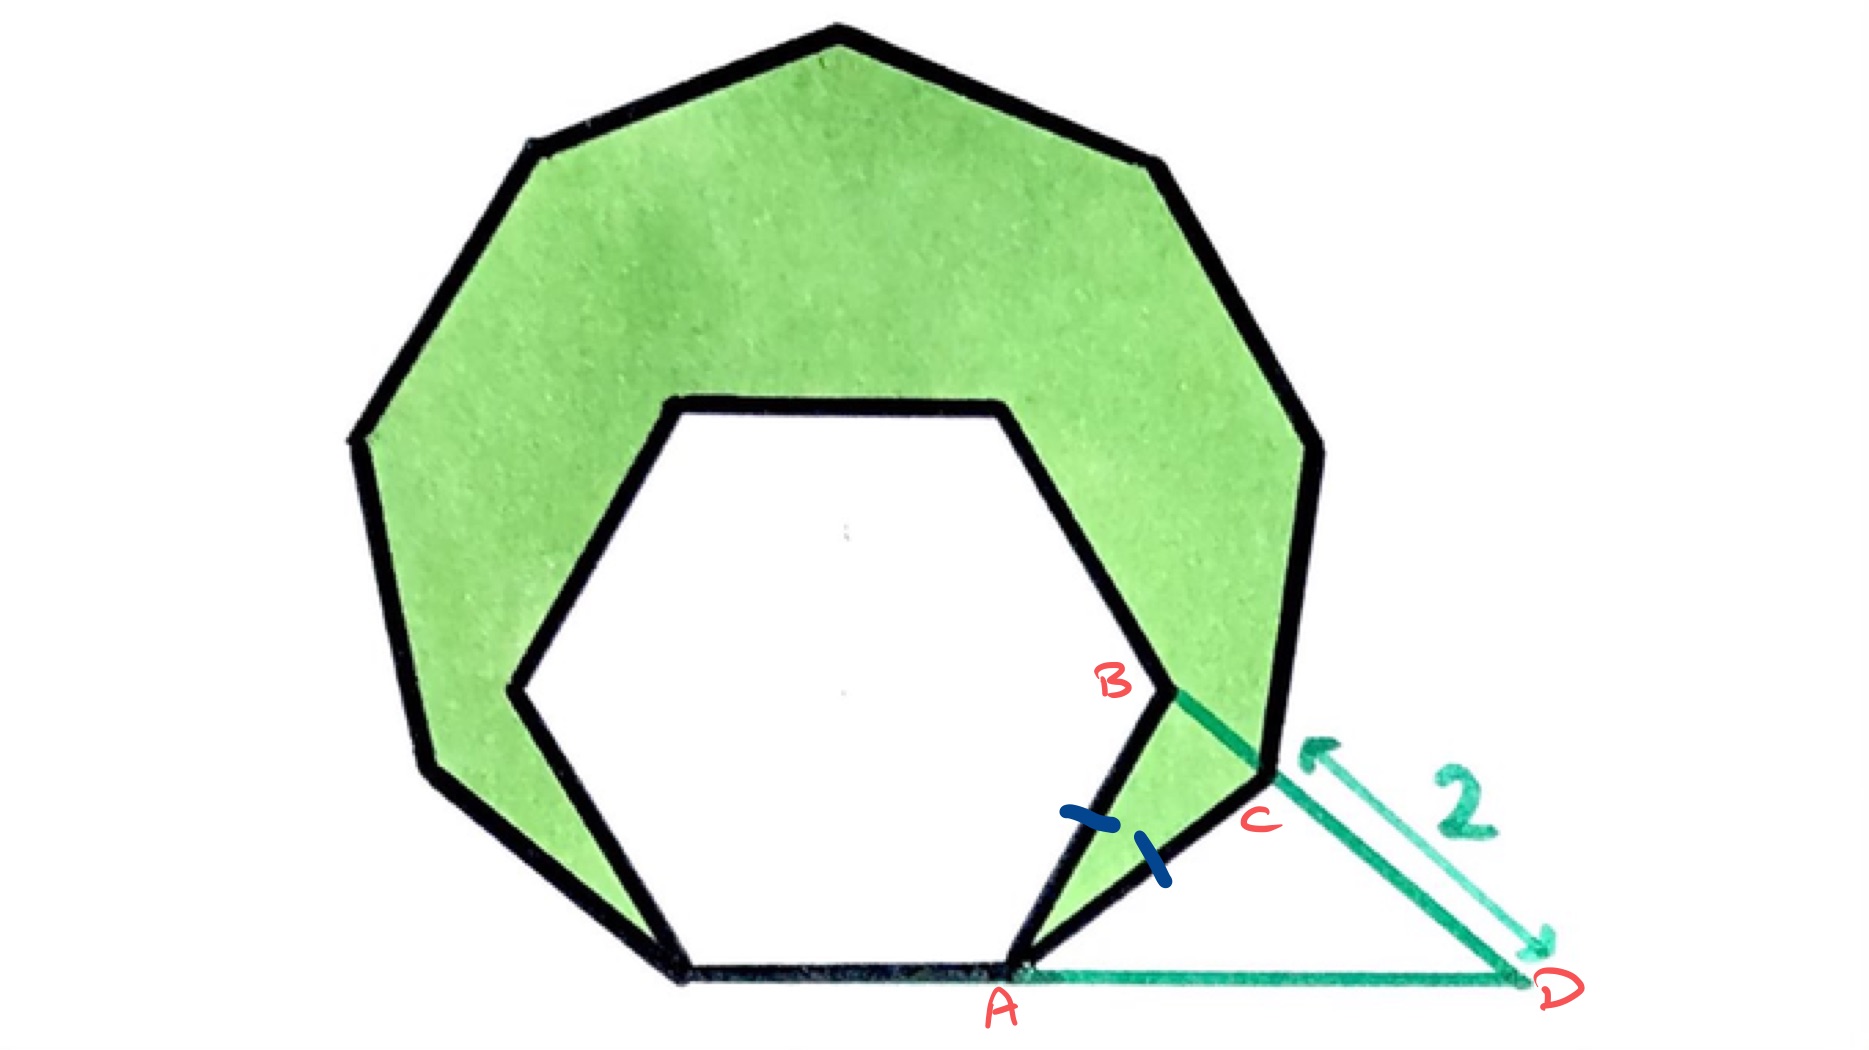 A hexagon and a nonagon labelled